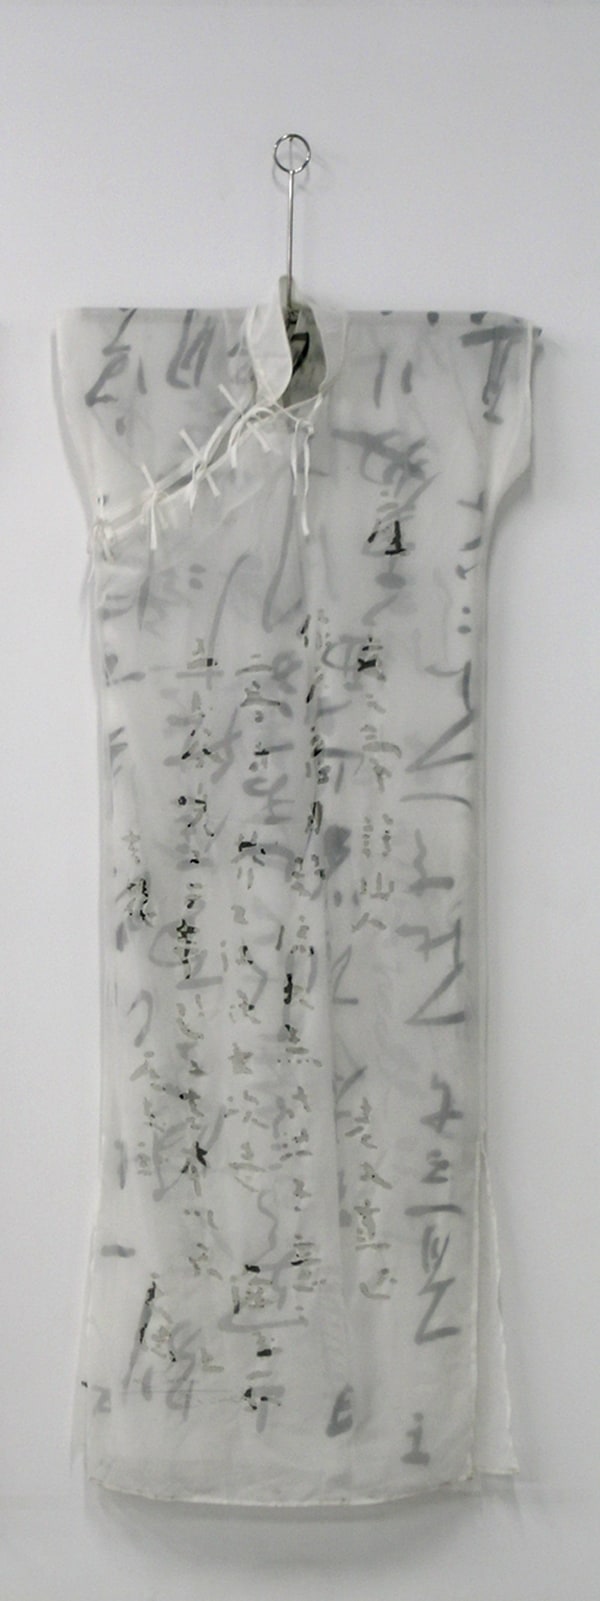 Chinese Clothes No. 04-D01 中国服装 No.04-D01, 2004